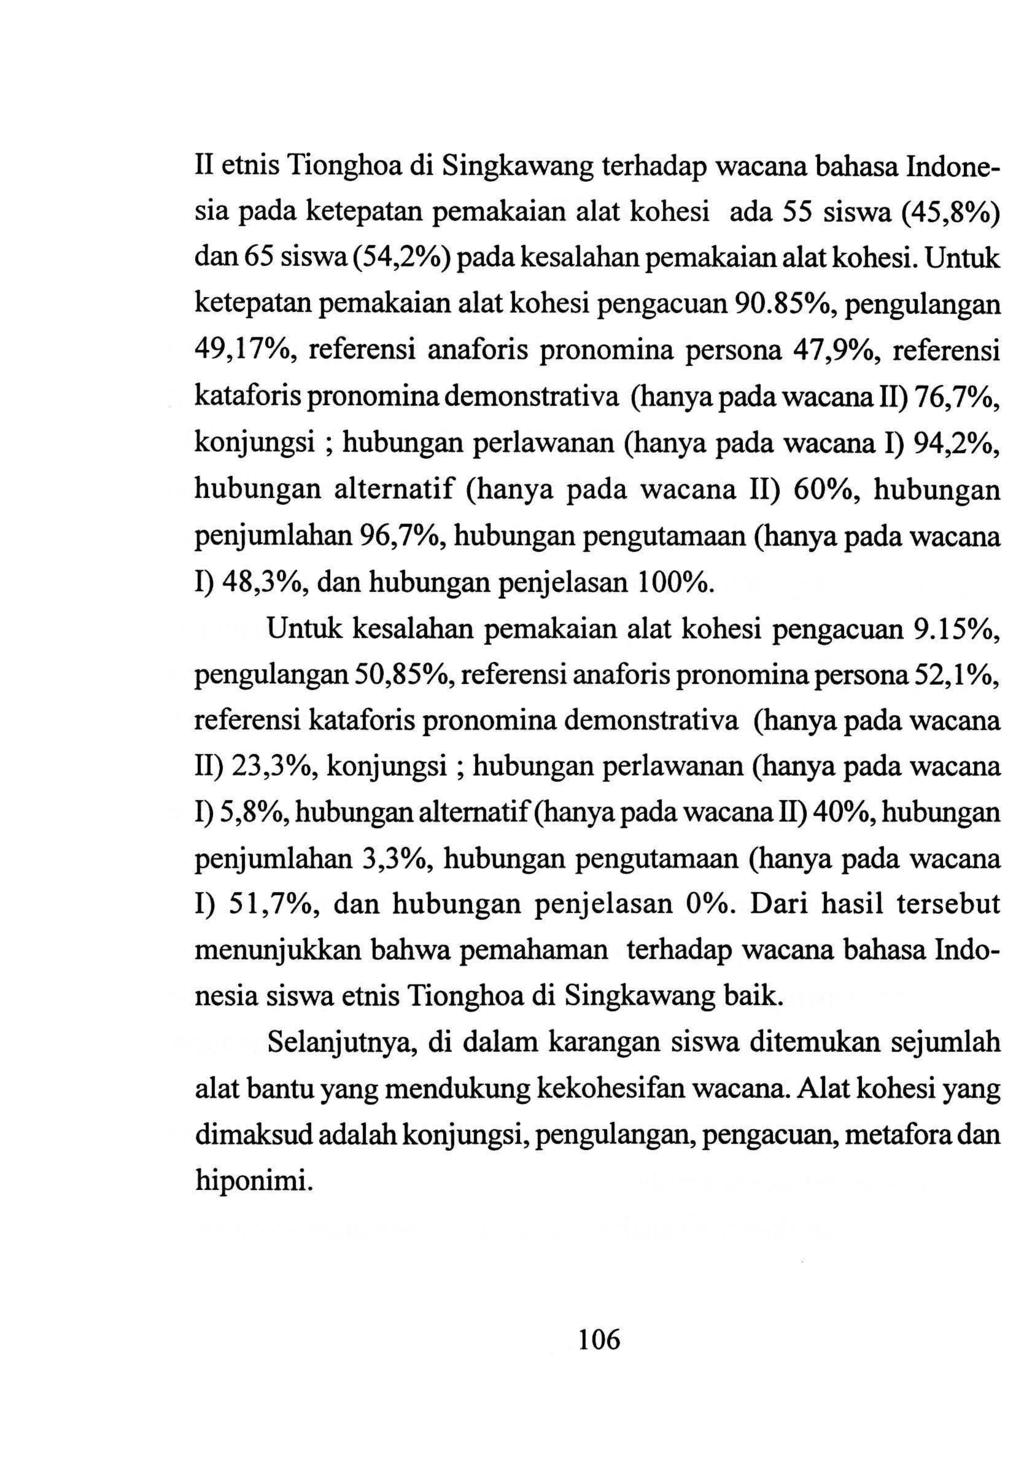 II etnis Tionghoa di Singkawang terhadap wacana bahasa Indonesia pada ketepatan pemakaian alat kohesi ada 55 siswa (45,8%) dan 65 siswa (54,2%) pada kesalahan pemakaian alat kohesi.